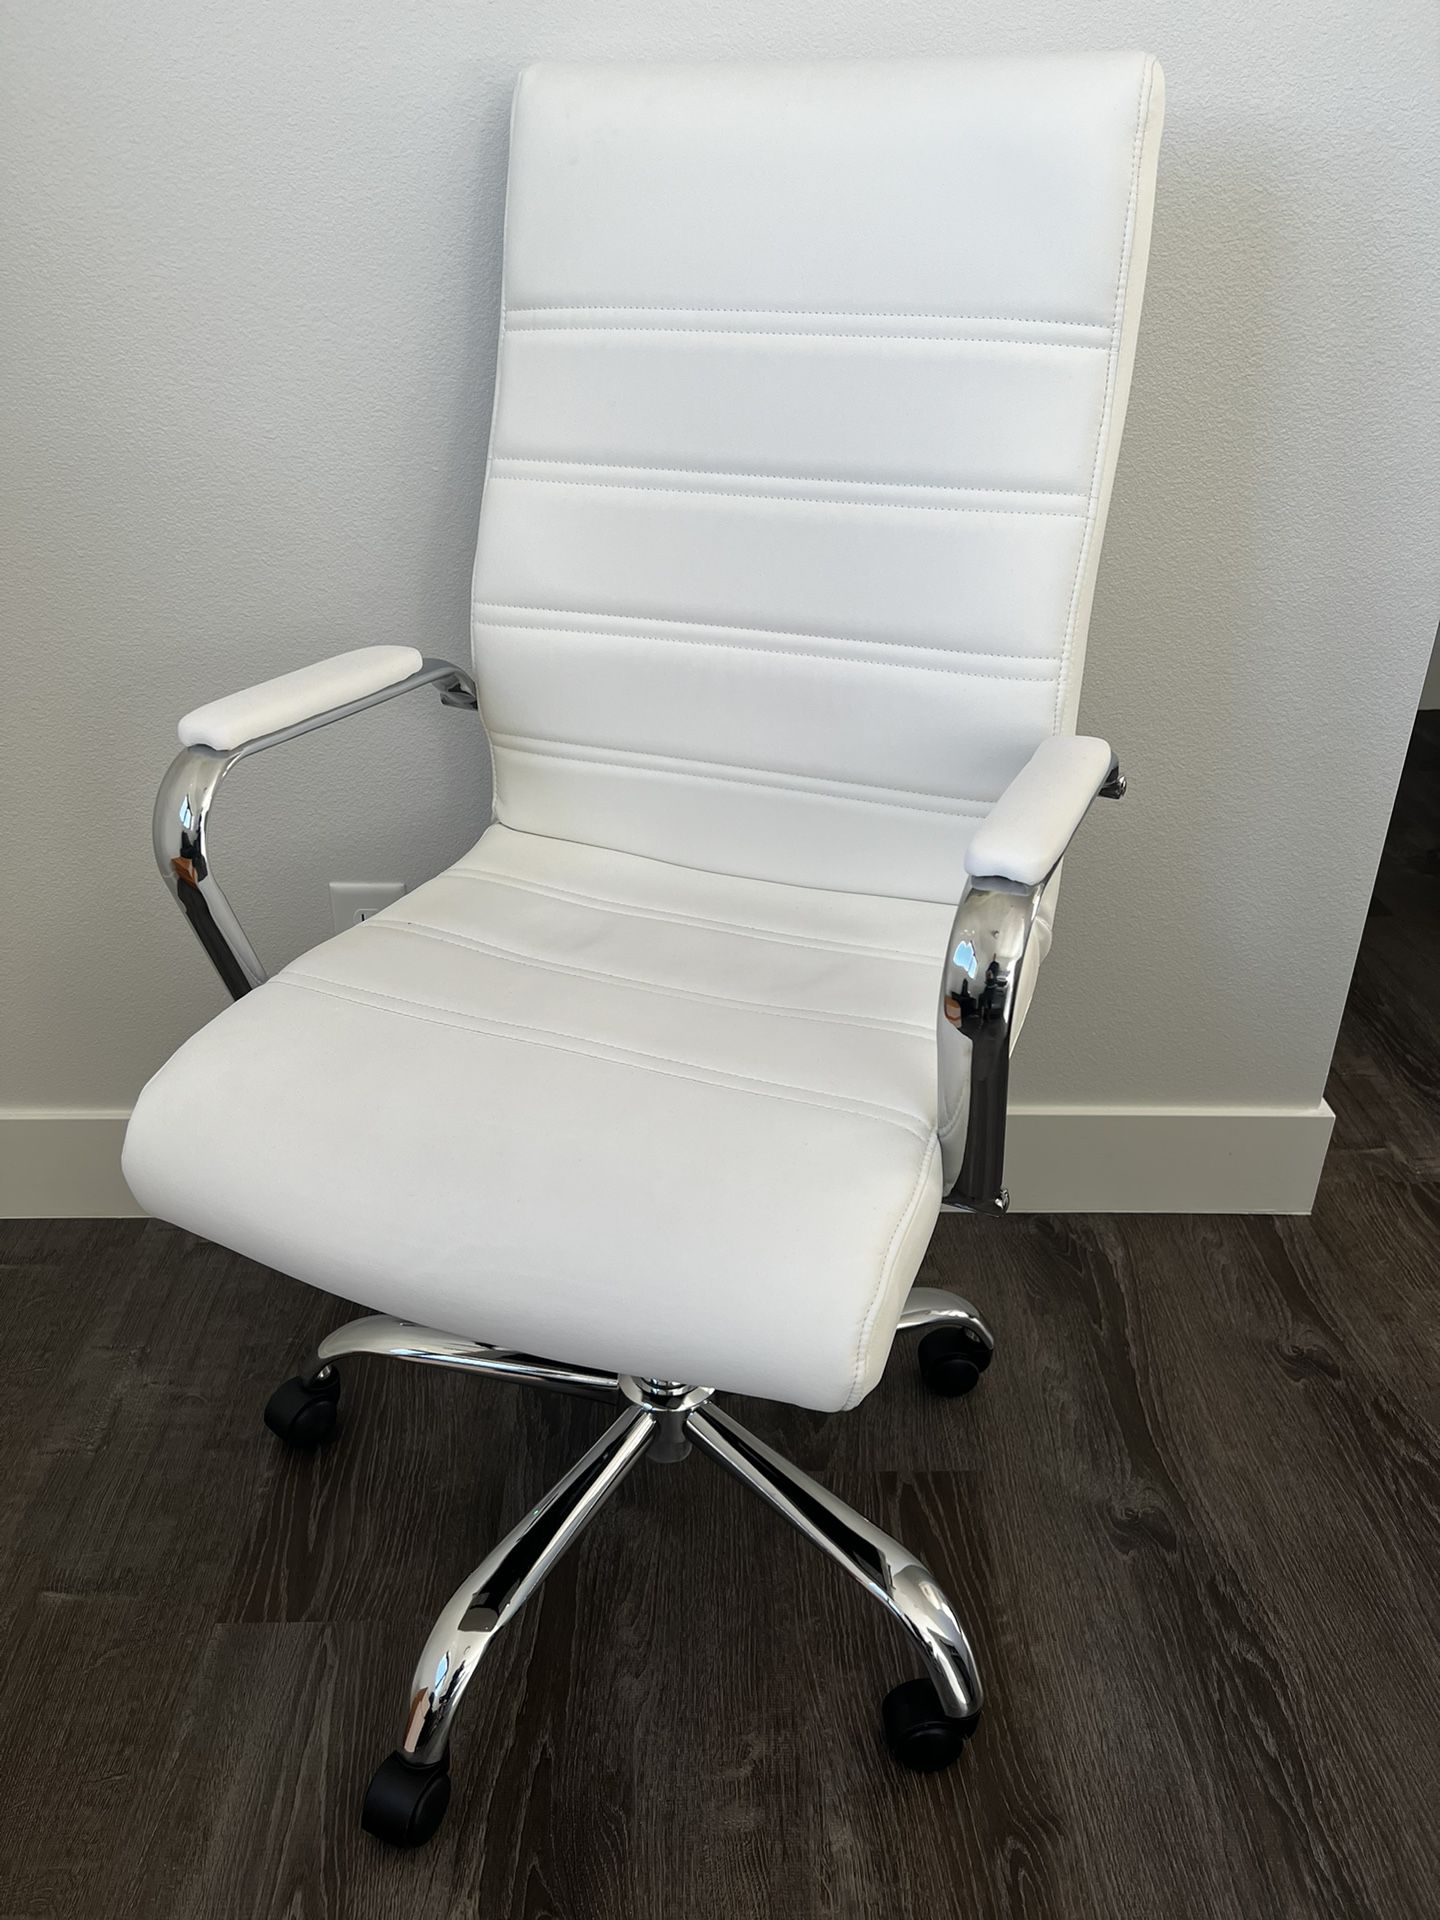 White Leather Office Swivel Chair W/Tilt Mechanism 